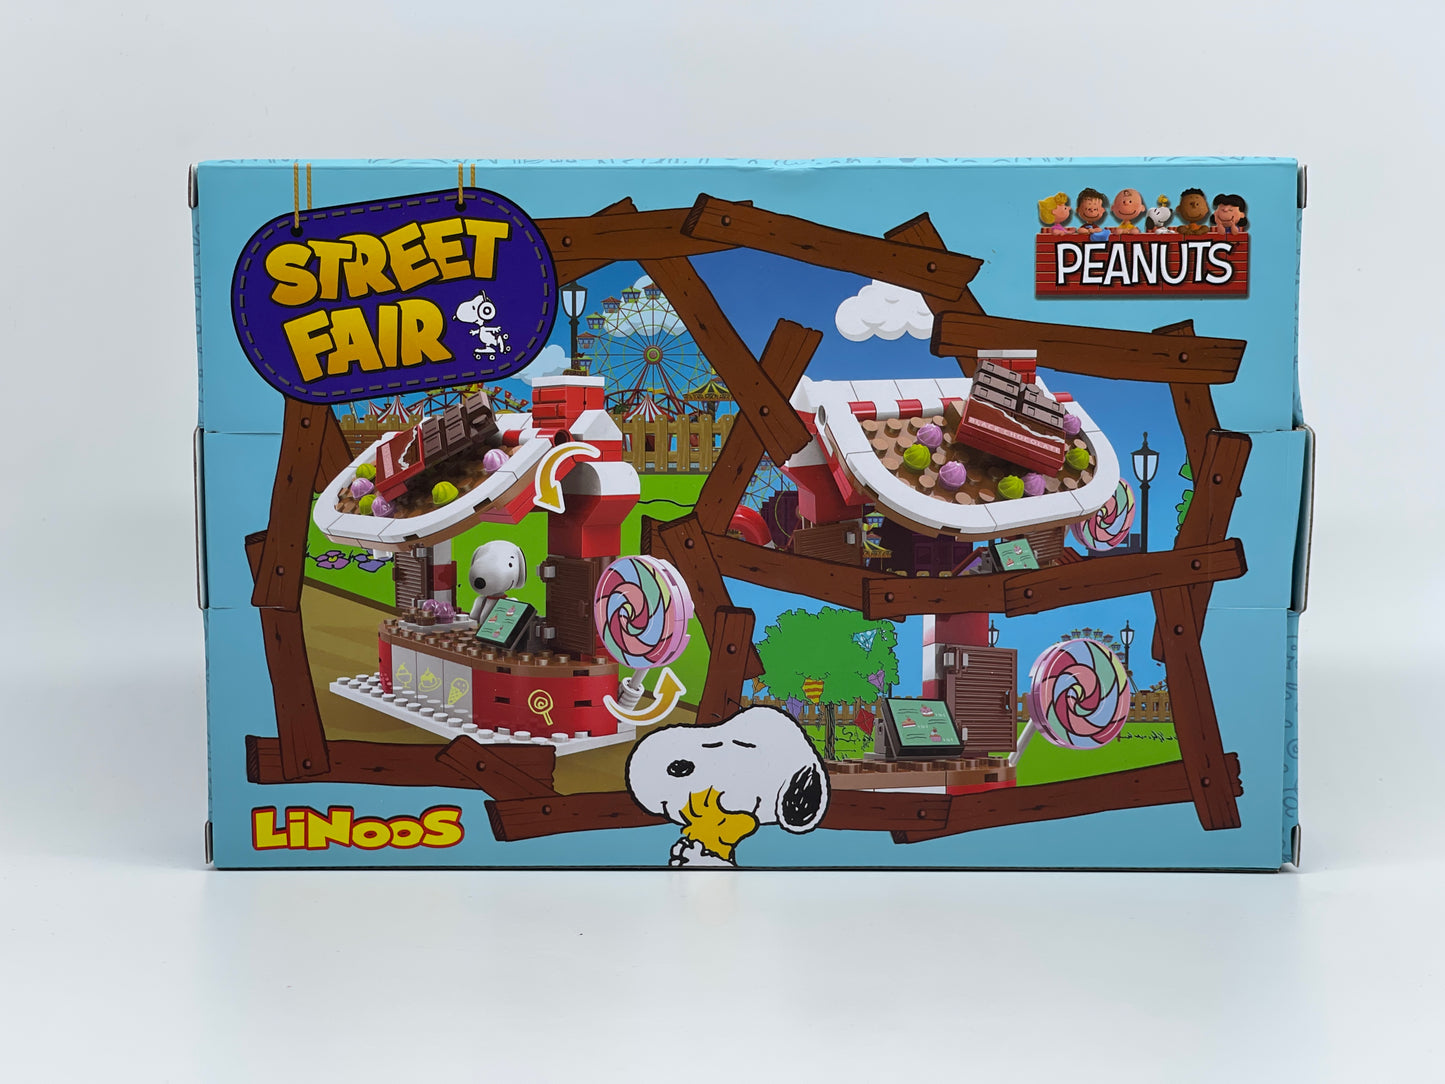 MINISO Japan "Peanuts Ice Cream Shop" Street Fair Building Blocks Linoos 145 pieces